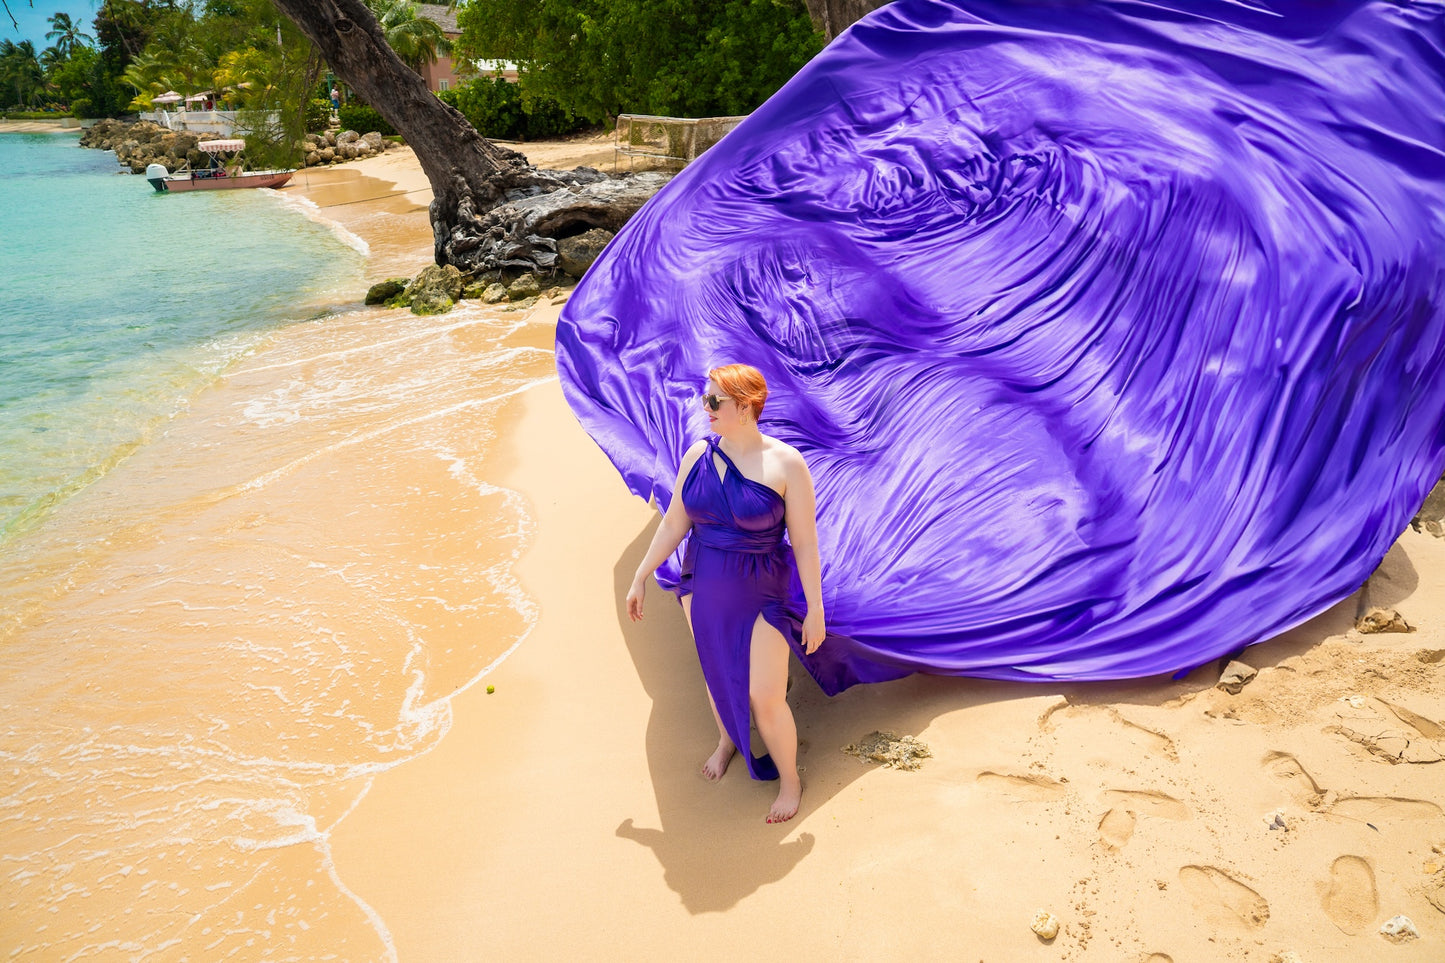 Flying Dress Barbados Photoshoot - Royal Purple